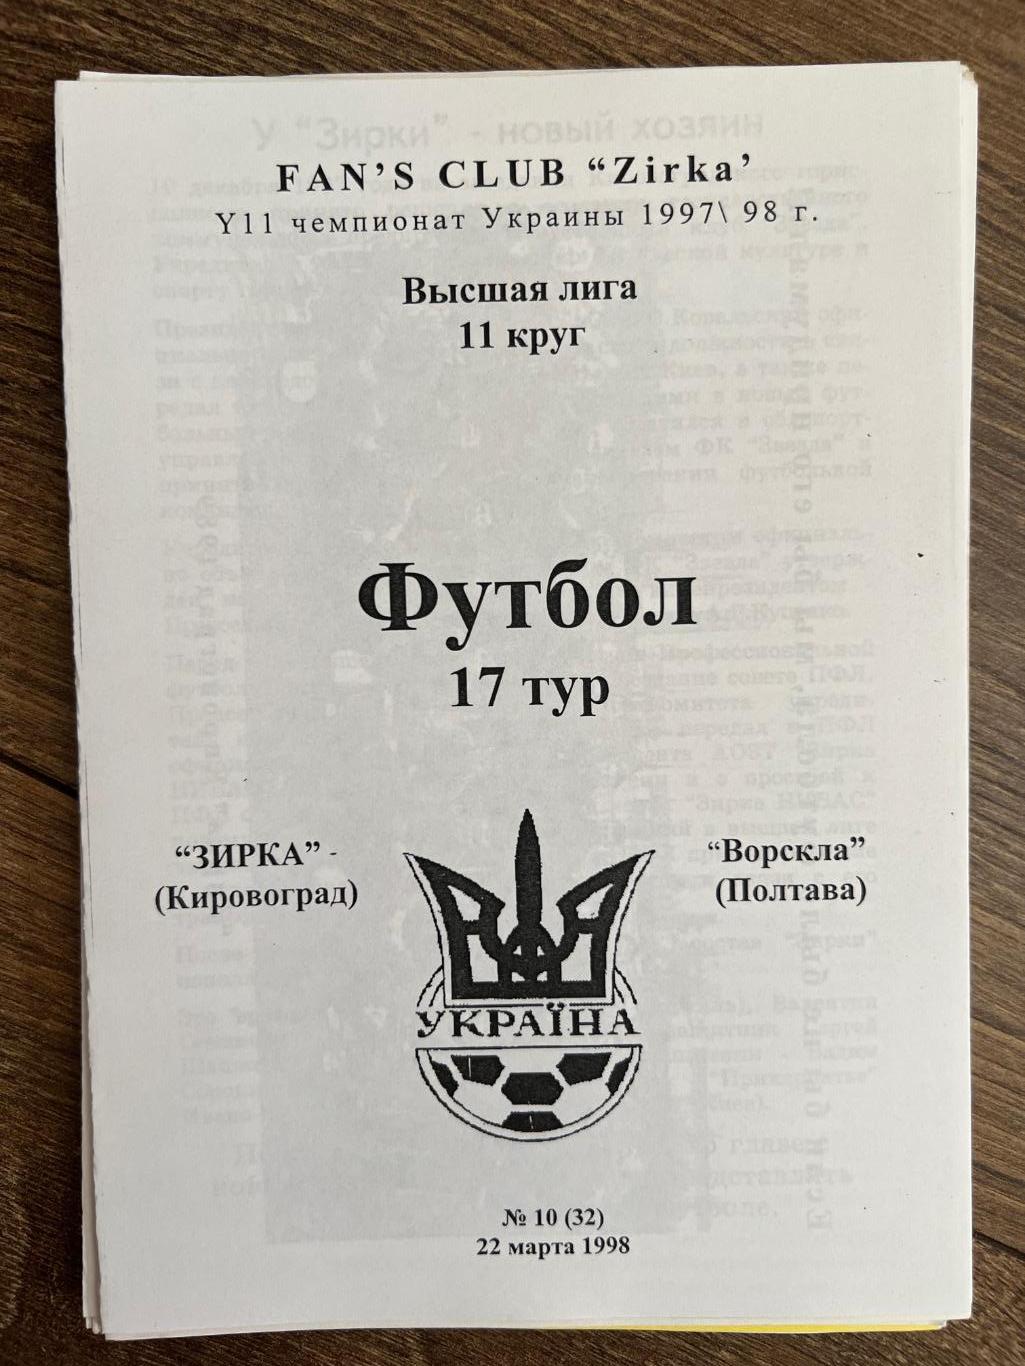 Звезда Кировоград - Ворскла Полтава 1997-1998 фан